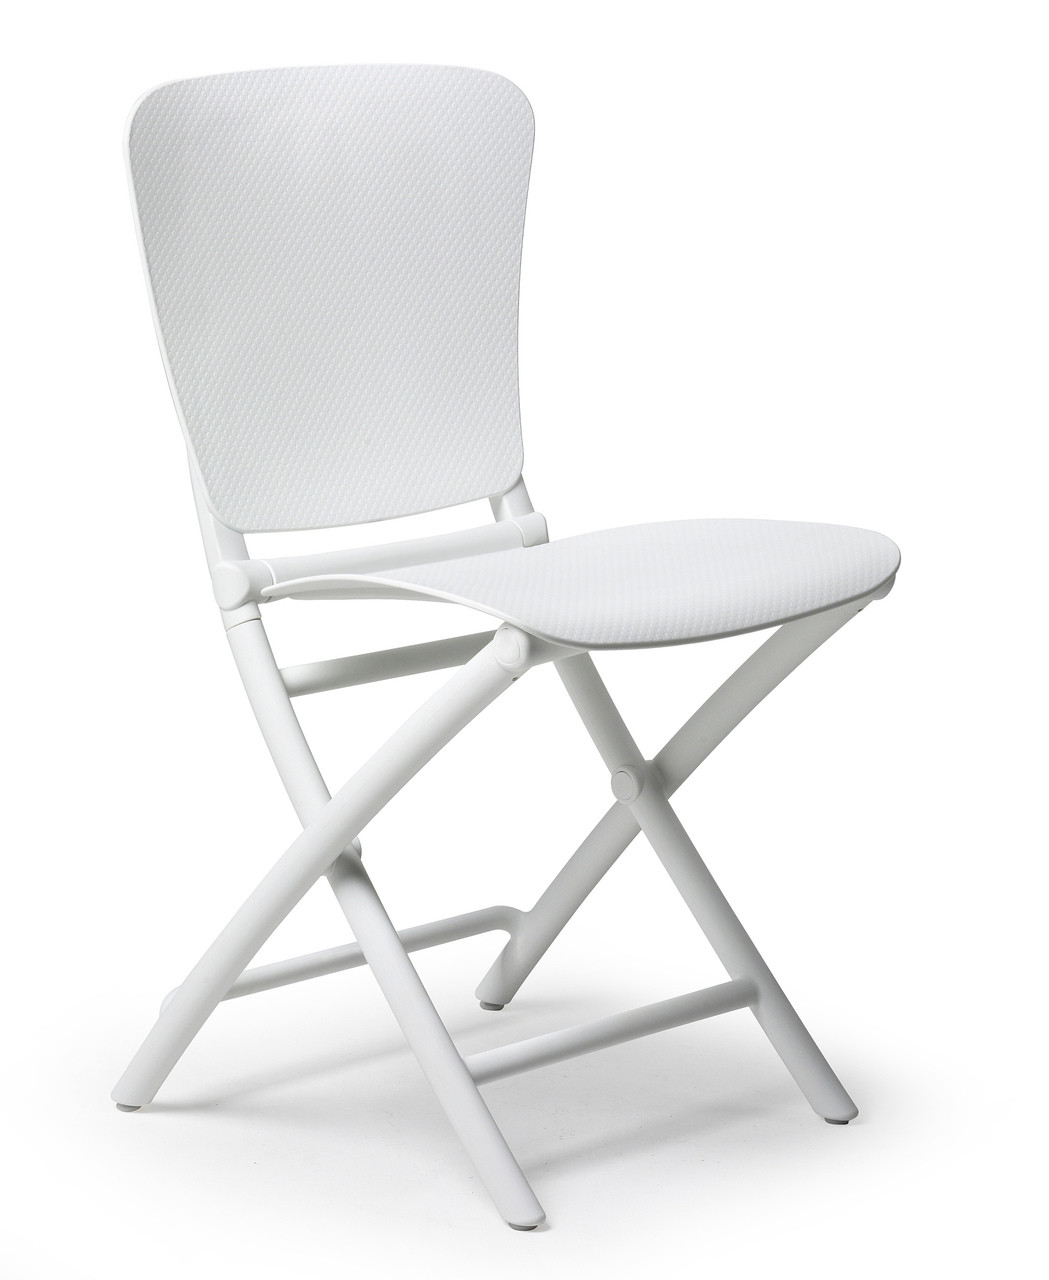 Nardi Zac Classic Deck Chair